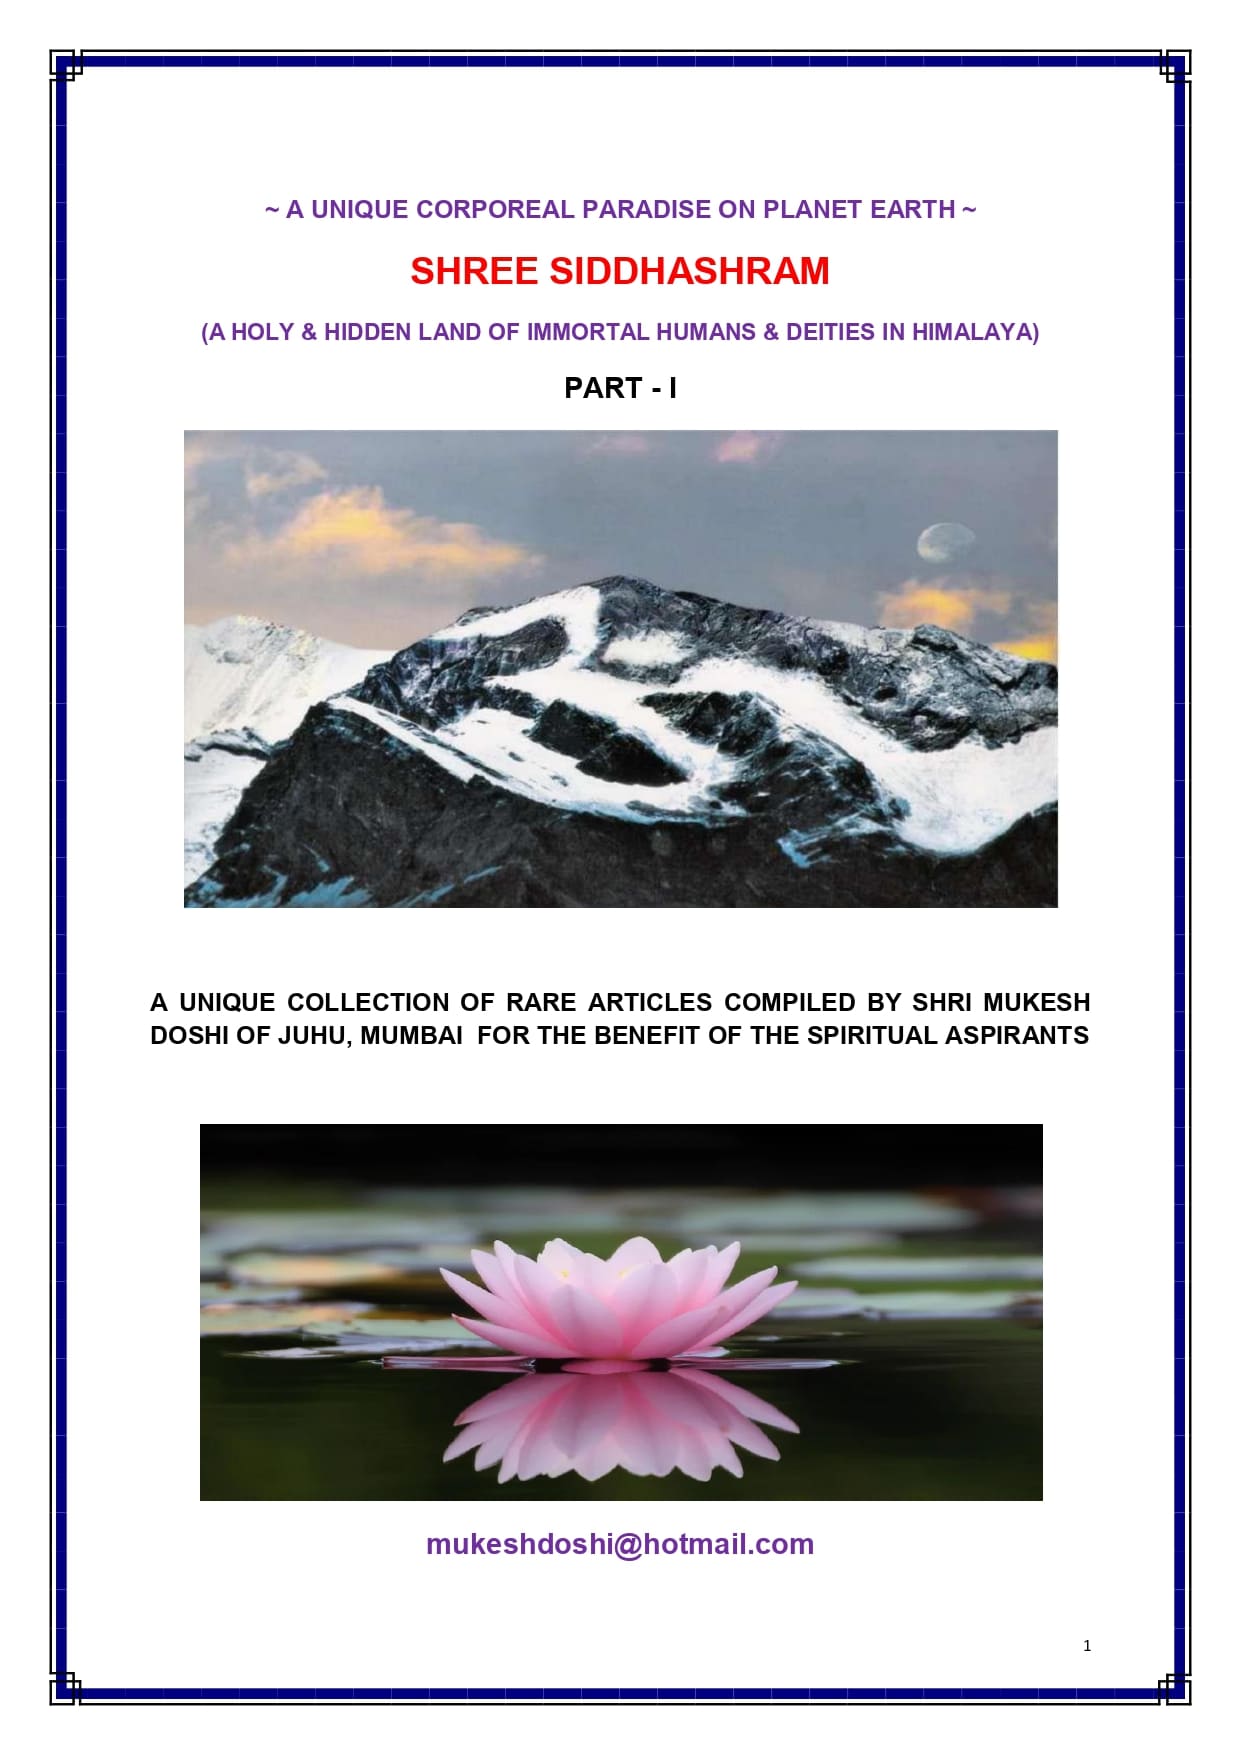 Shree Siddhashram